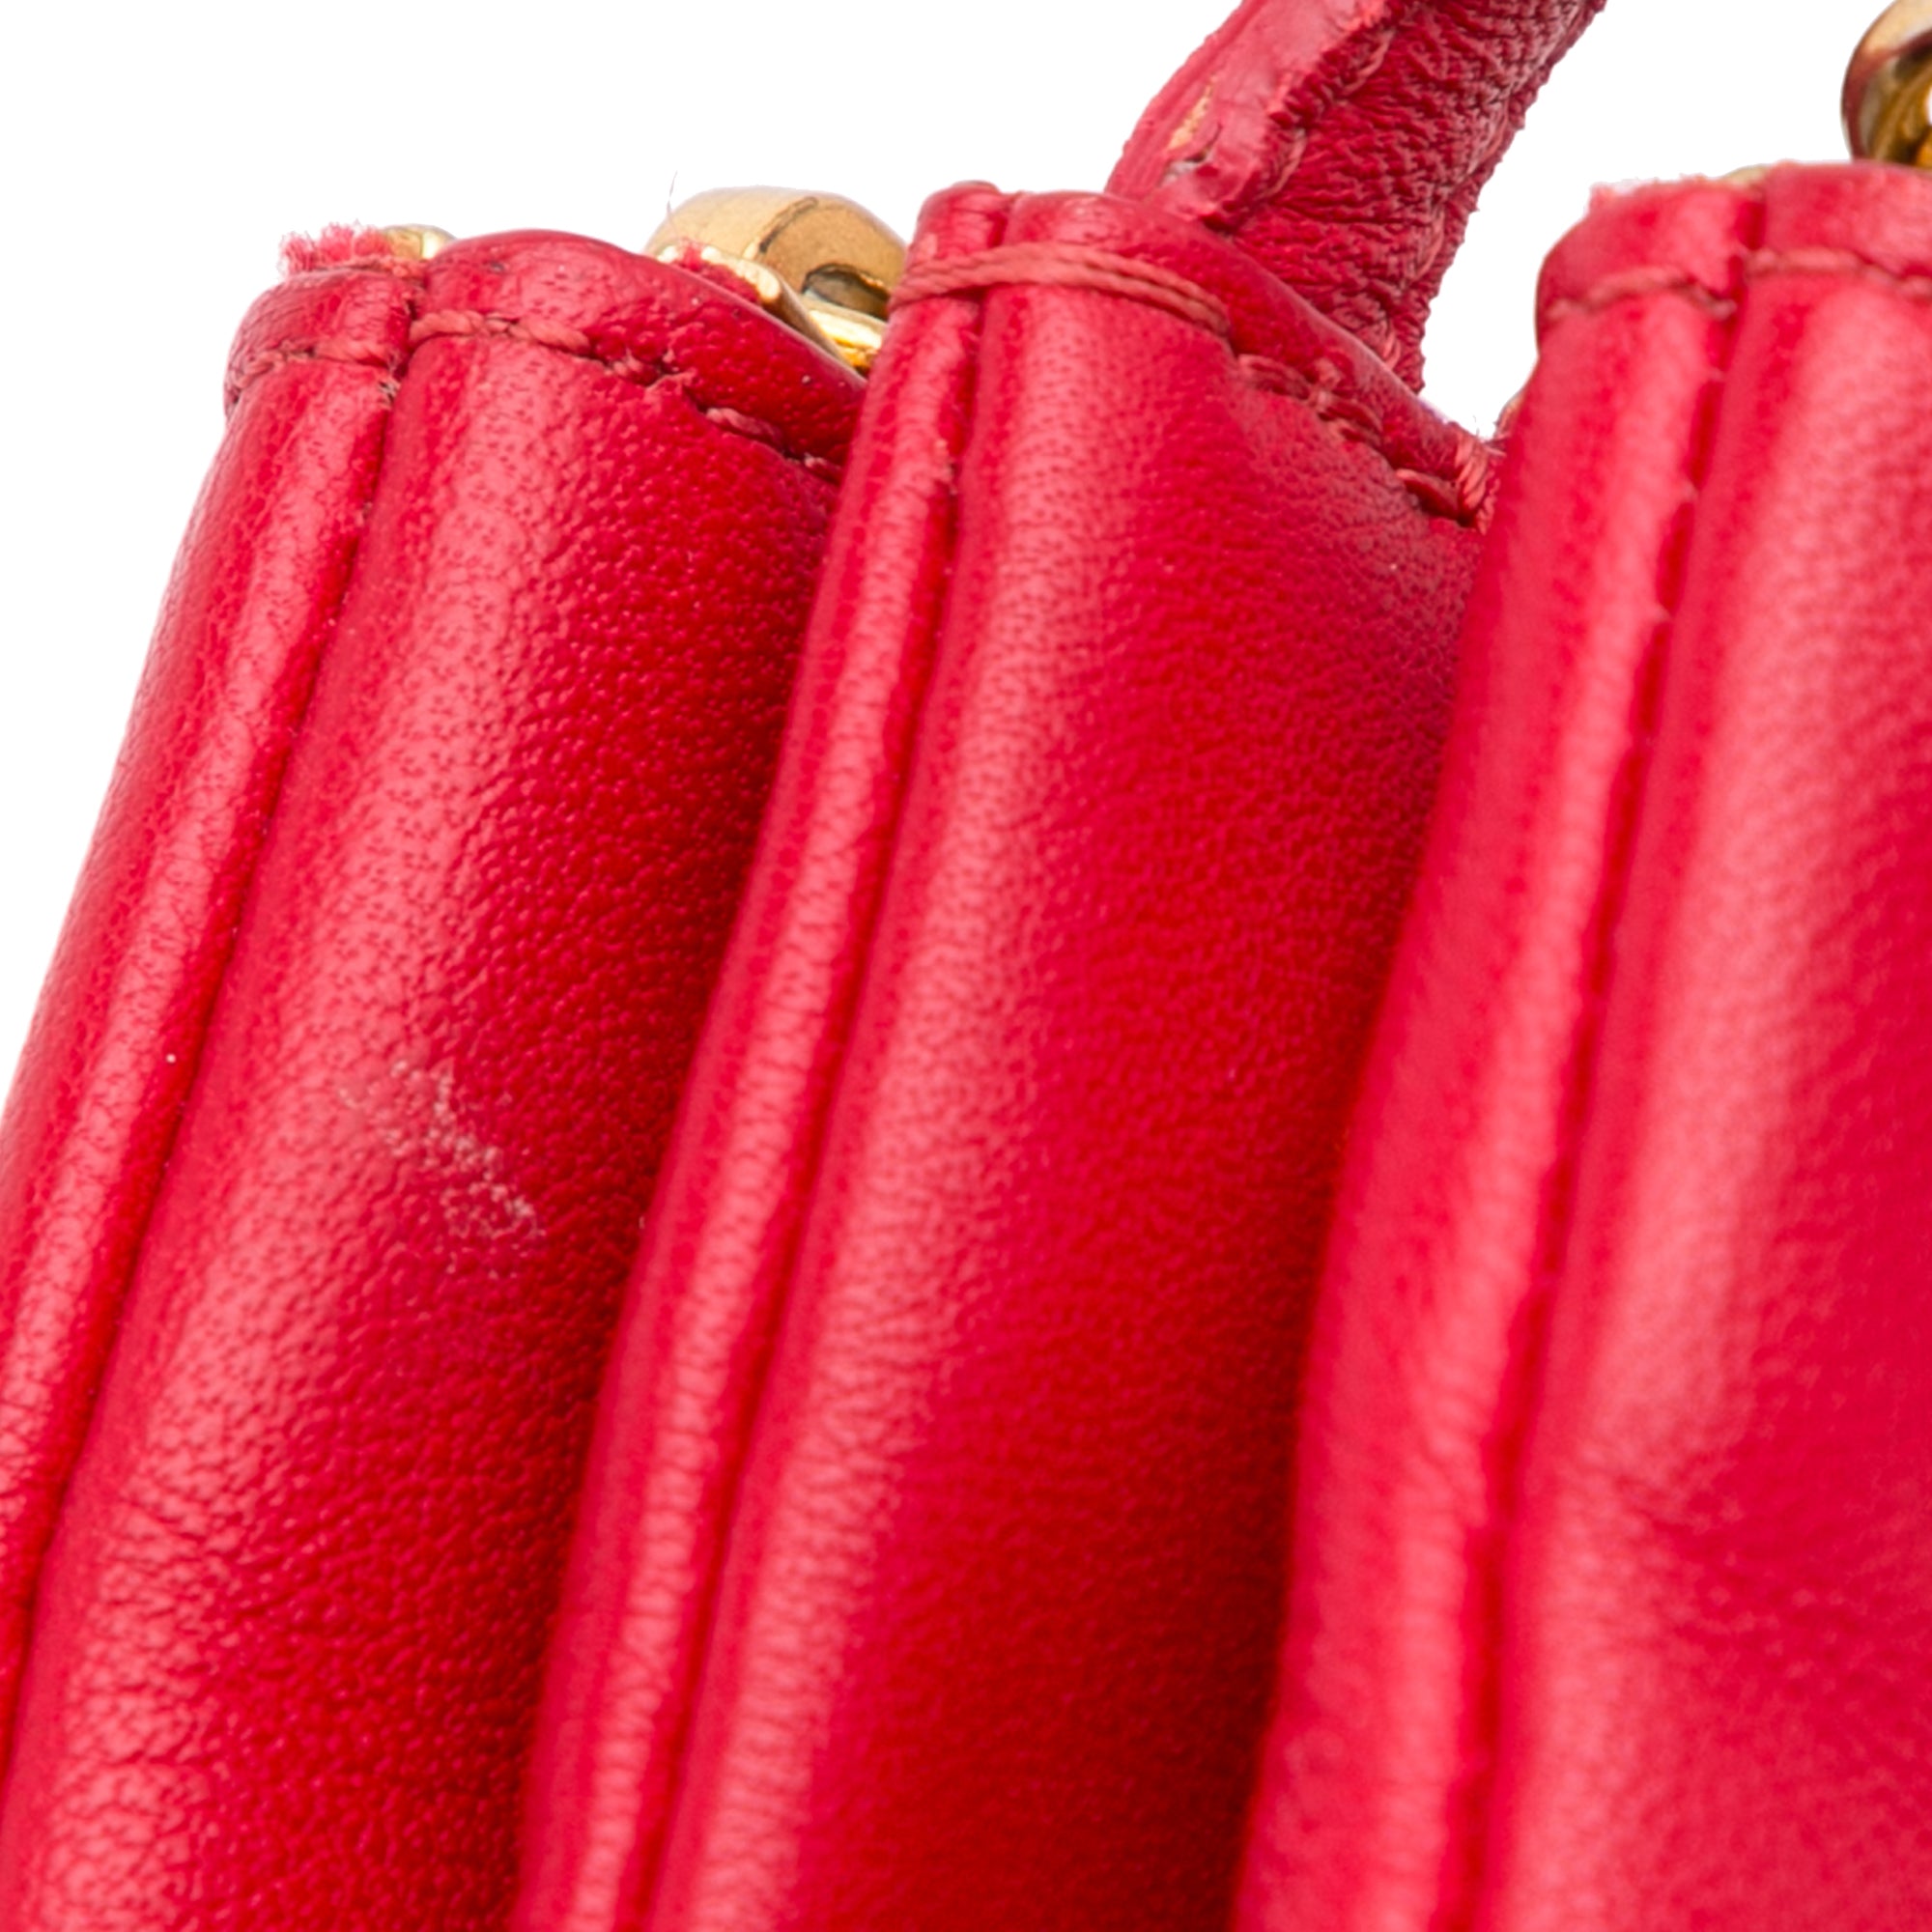 Celine Trio Crossbody Bag Leather Small Red 21809039